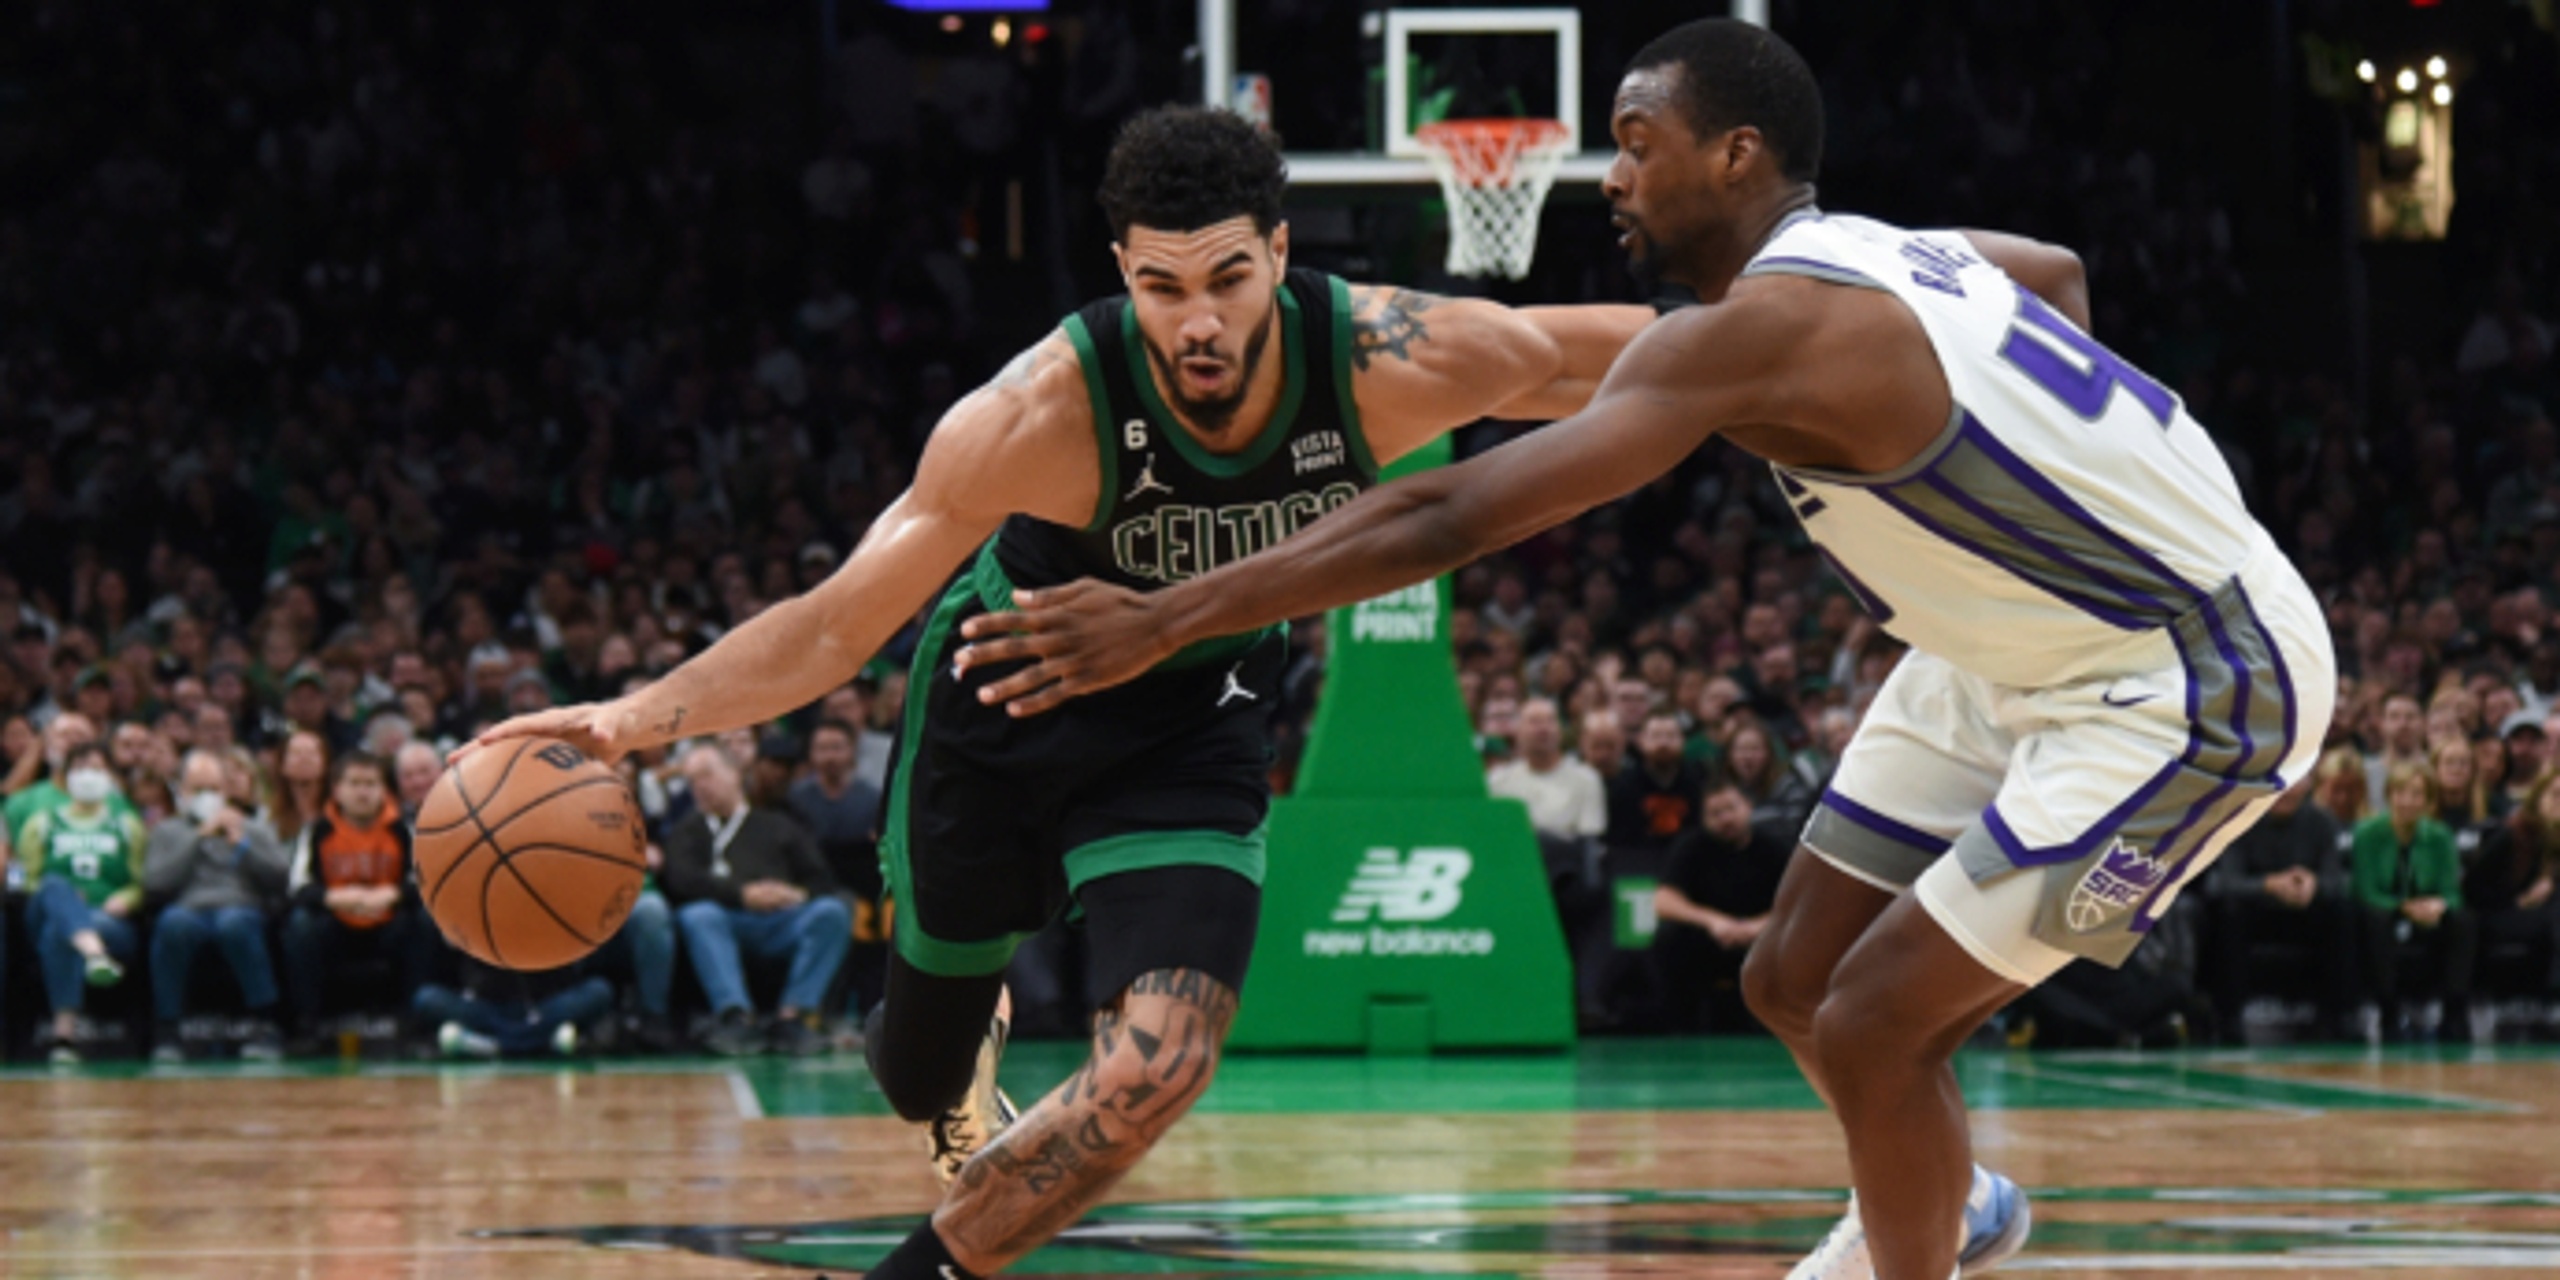 Tatum scores 30; Celtics pull away from Kings, 122-104